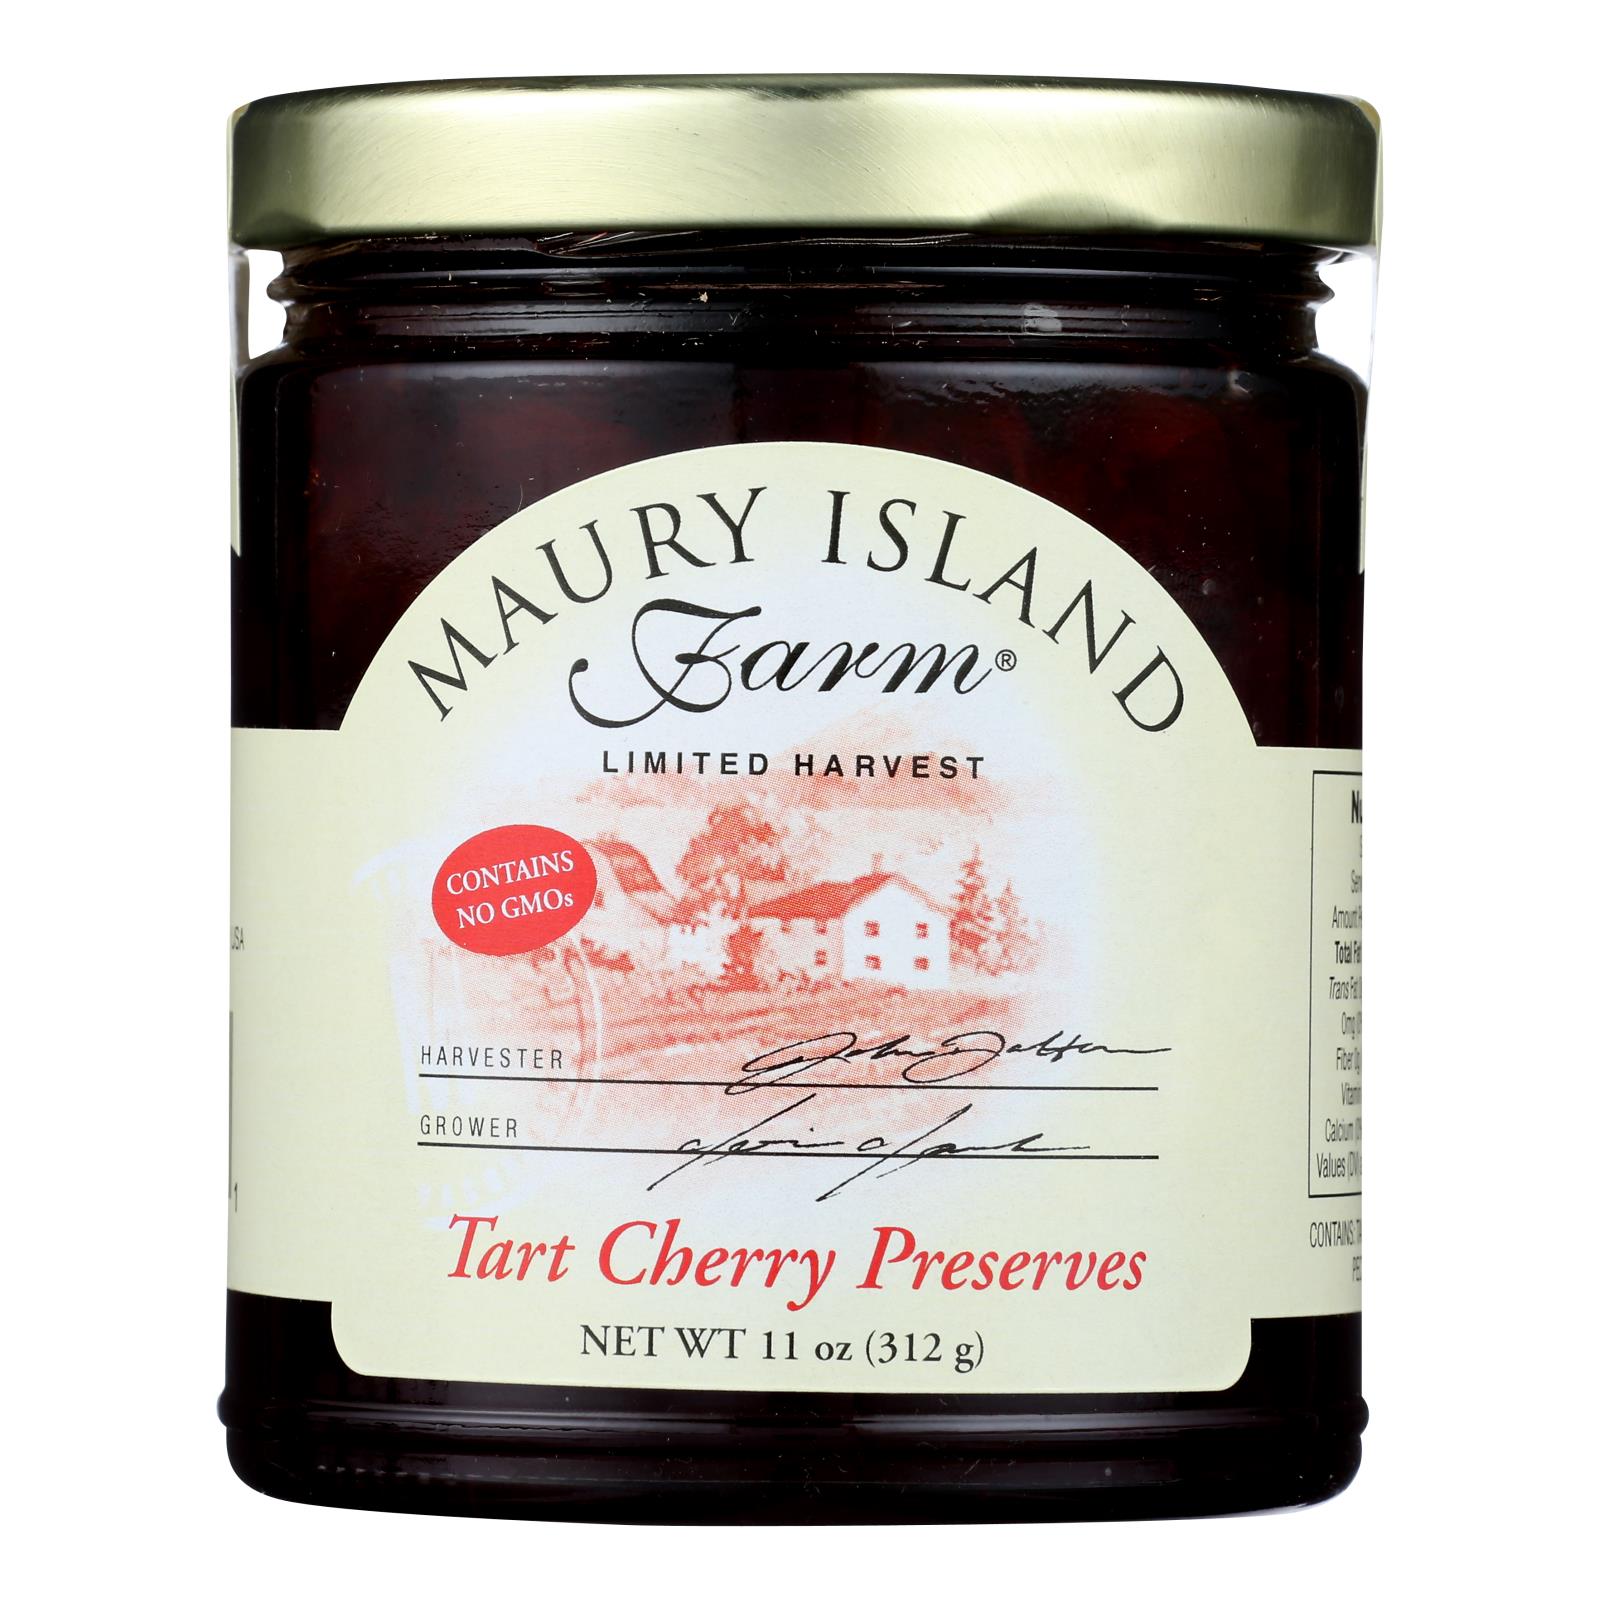 Maury Island Farm Tart Cherry Preserves Cherry - Case of 12 - 11 OZ